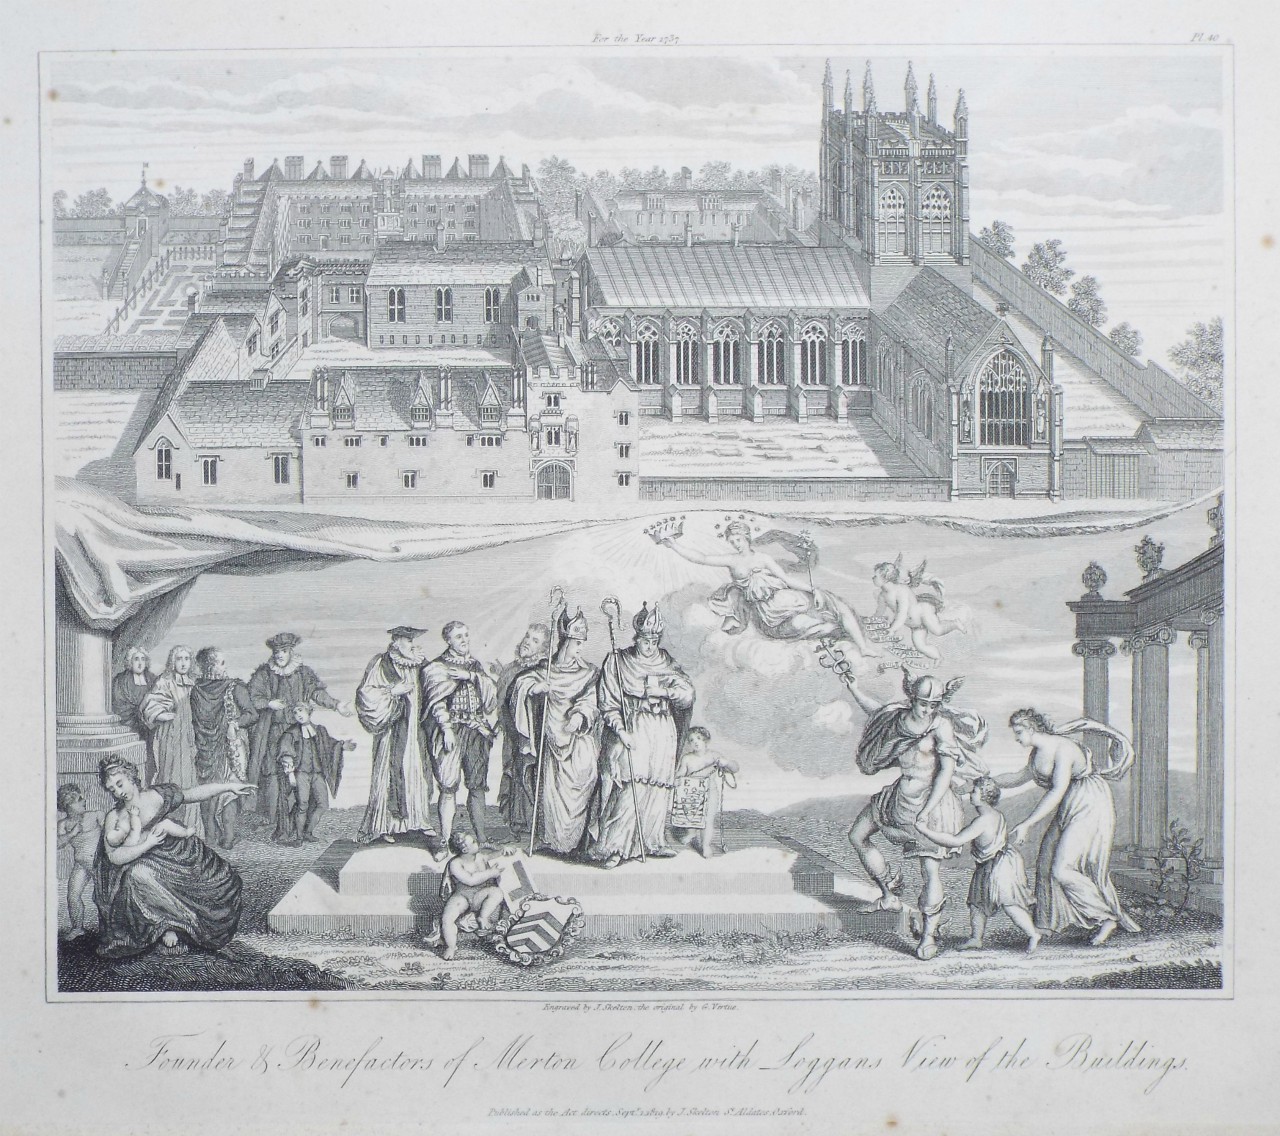 Print - Founder & Benefactors of Merton College, with Loggan's View of the Buildings.Merton Oxford - Skelton